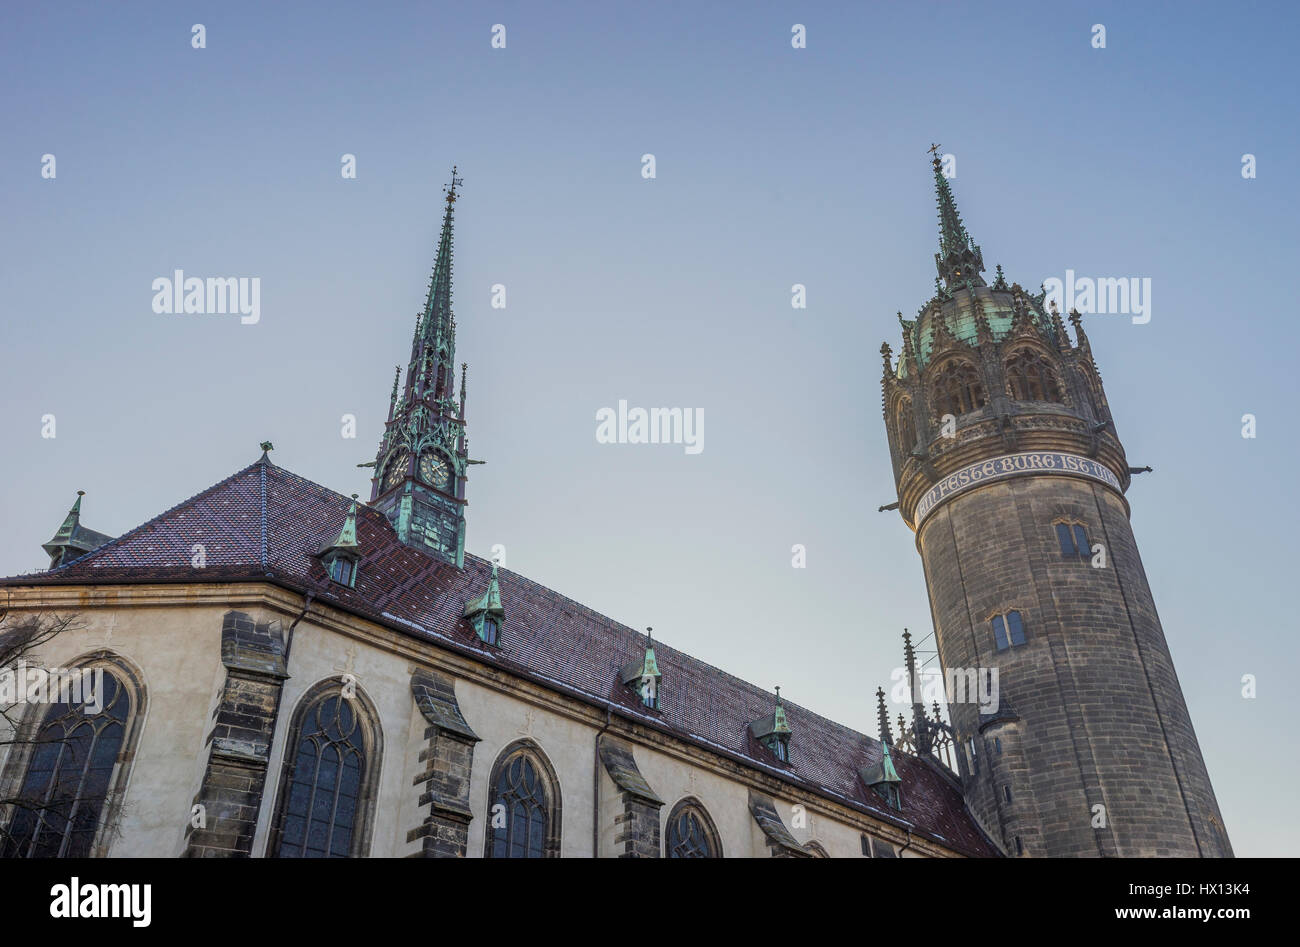 Germania, Lutherstadt Wittenberg, vista al castello chiesa dal basso Foto Stock